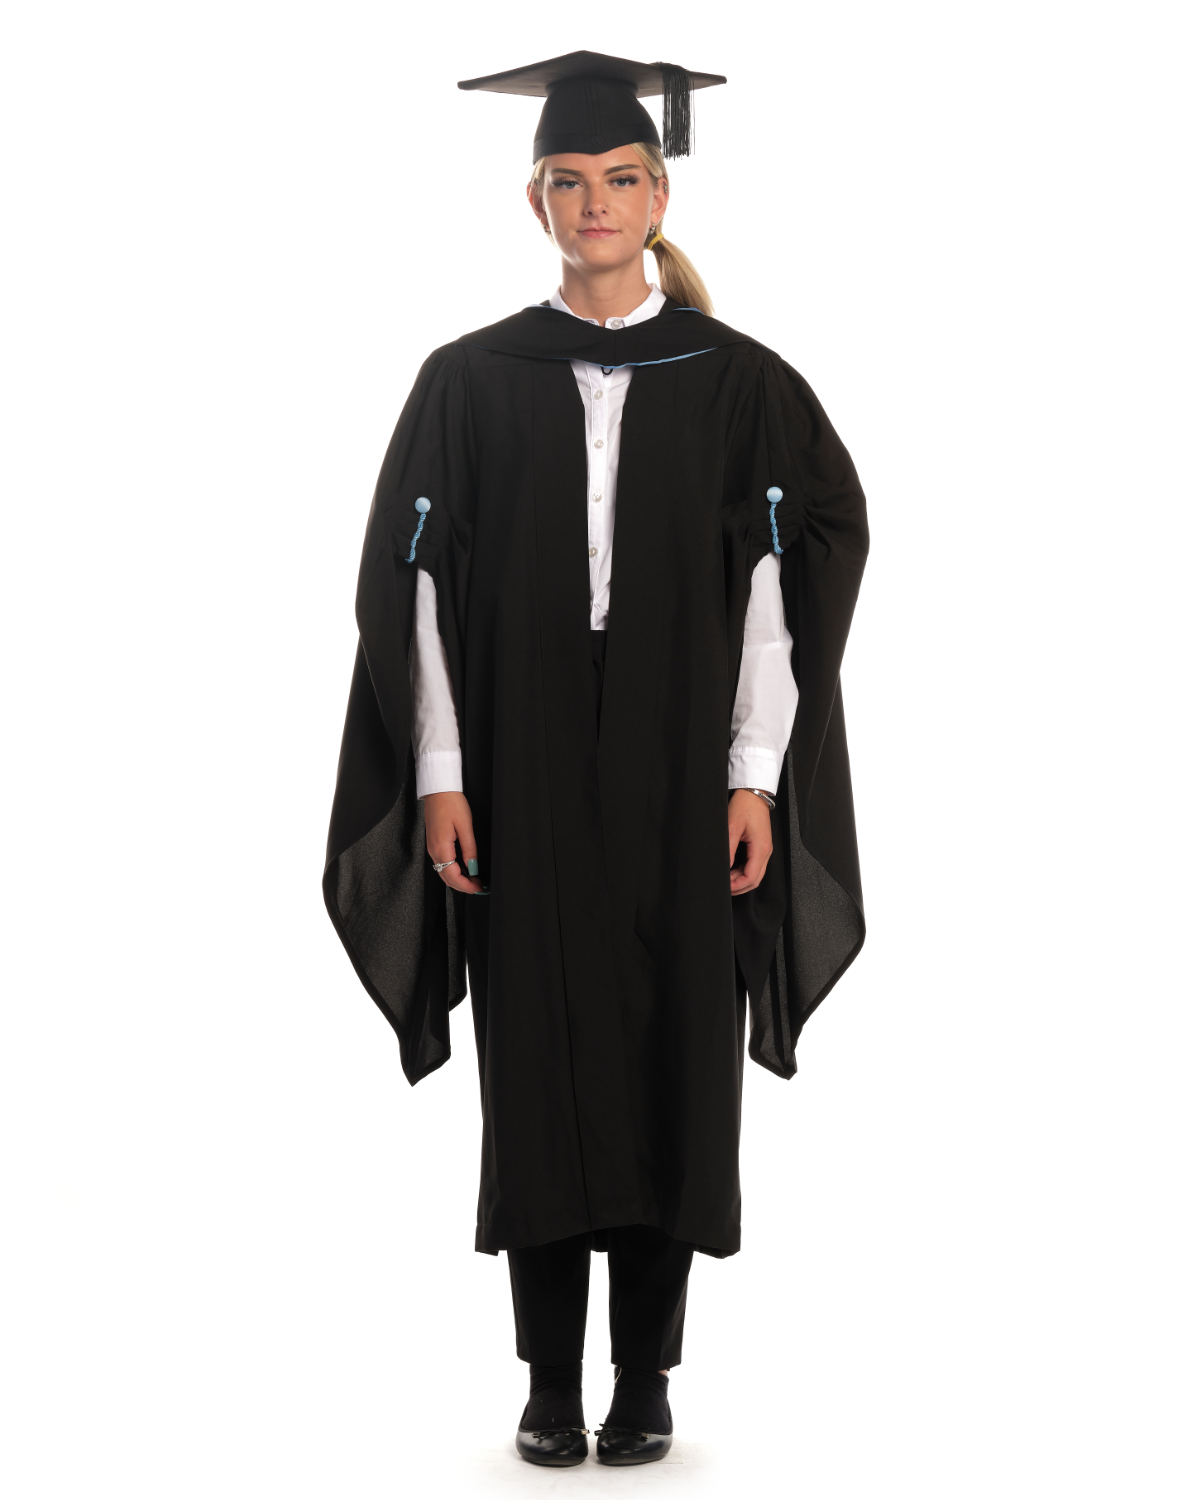 University of Southampton | BSocSc | Bachelor of Social Science Gown, Cap and Hood Set